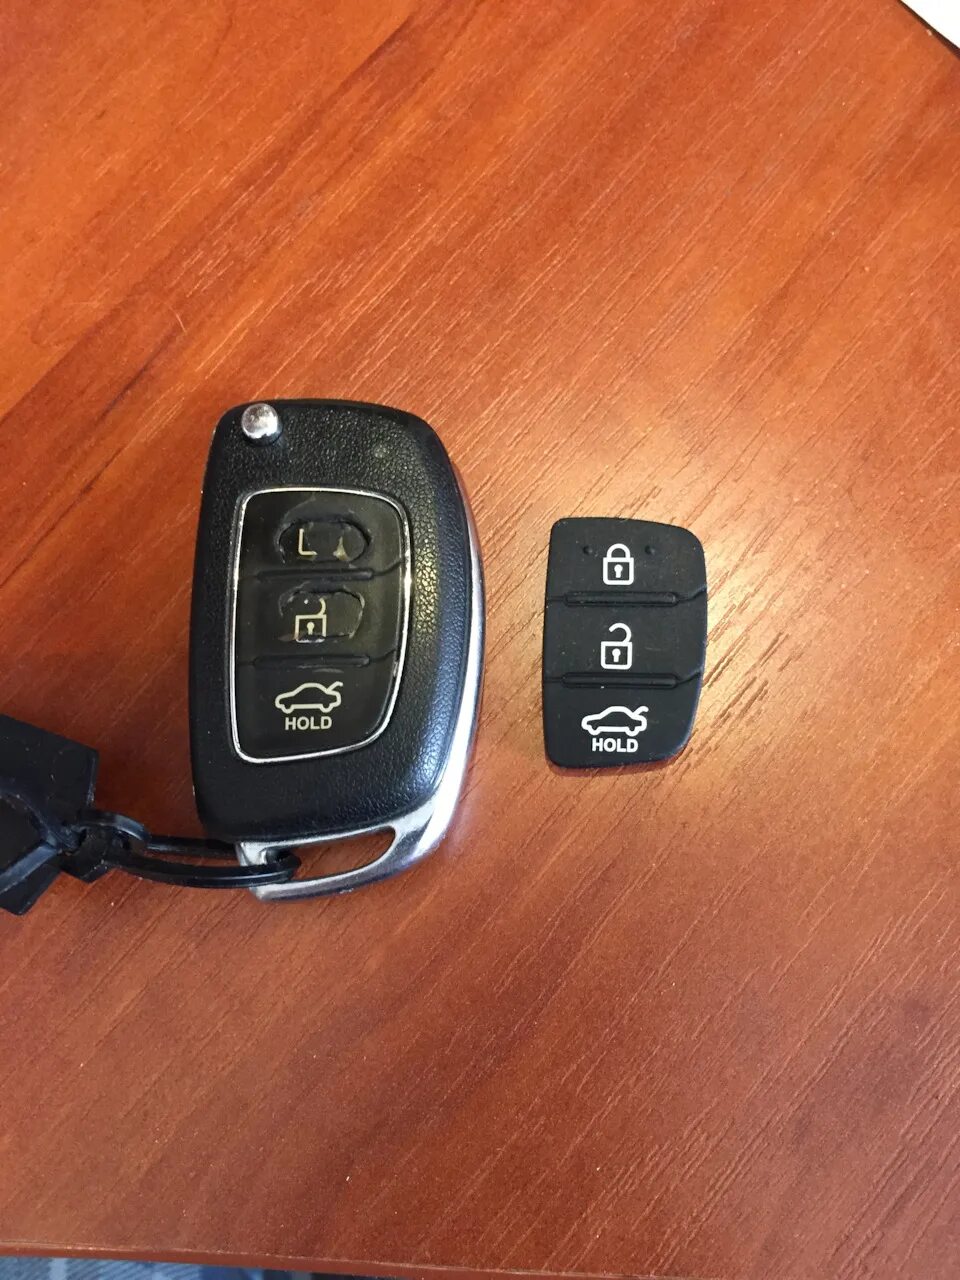 Hyundai Solaris 2013 ключ. Хёндай Солярис 1.6 ключ. Ключ от Хендай Солярис 2013. Ключ зажигания Хендай Солярис 2013 года. Ключ солярис купить